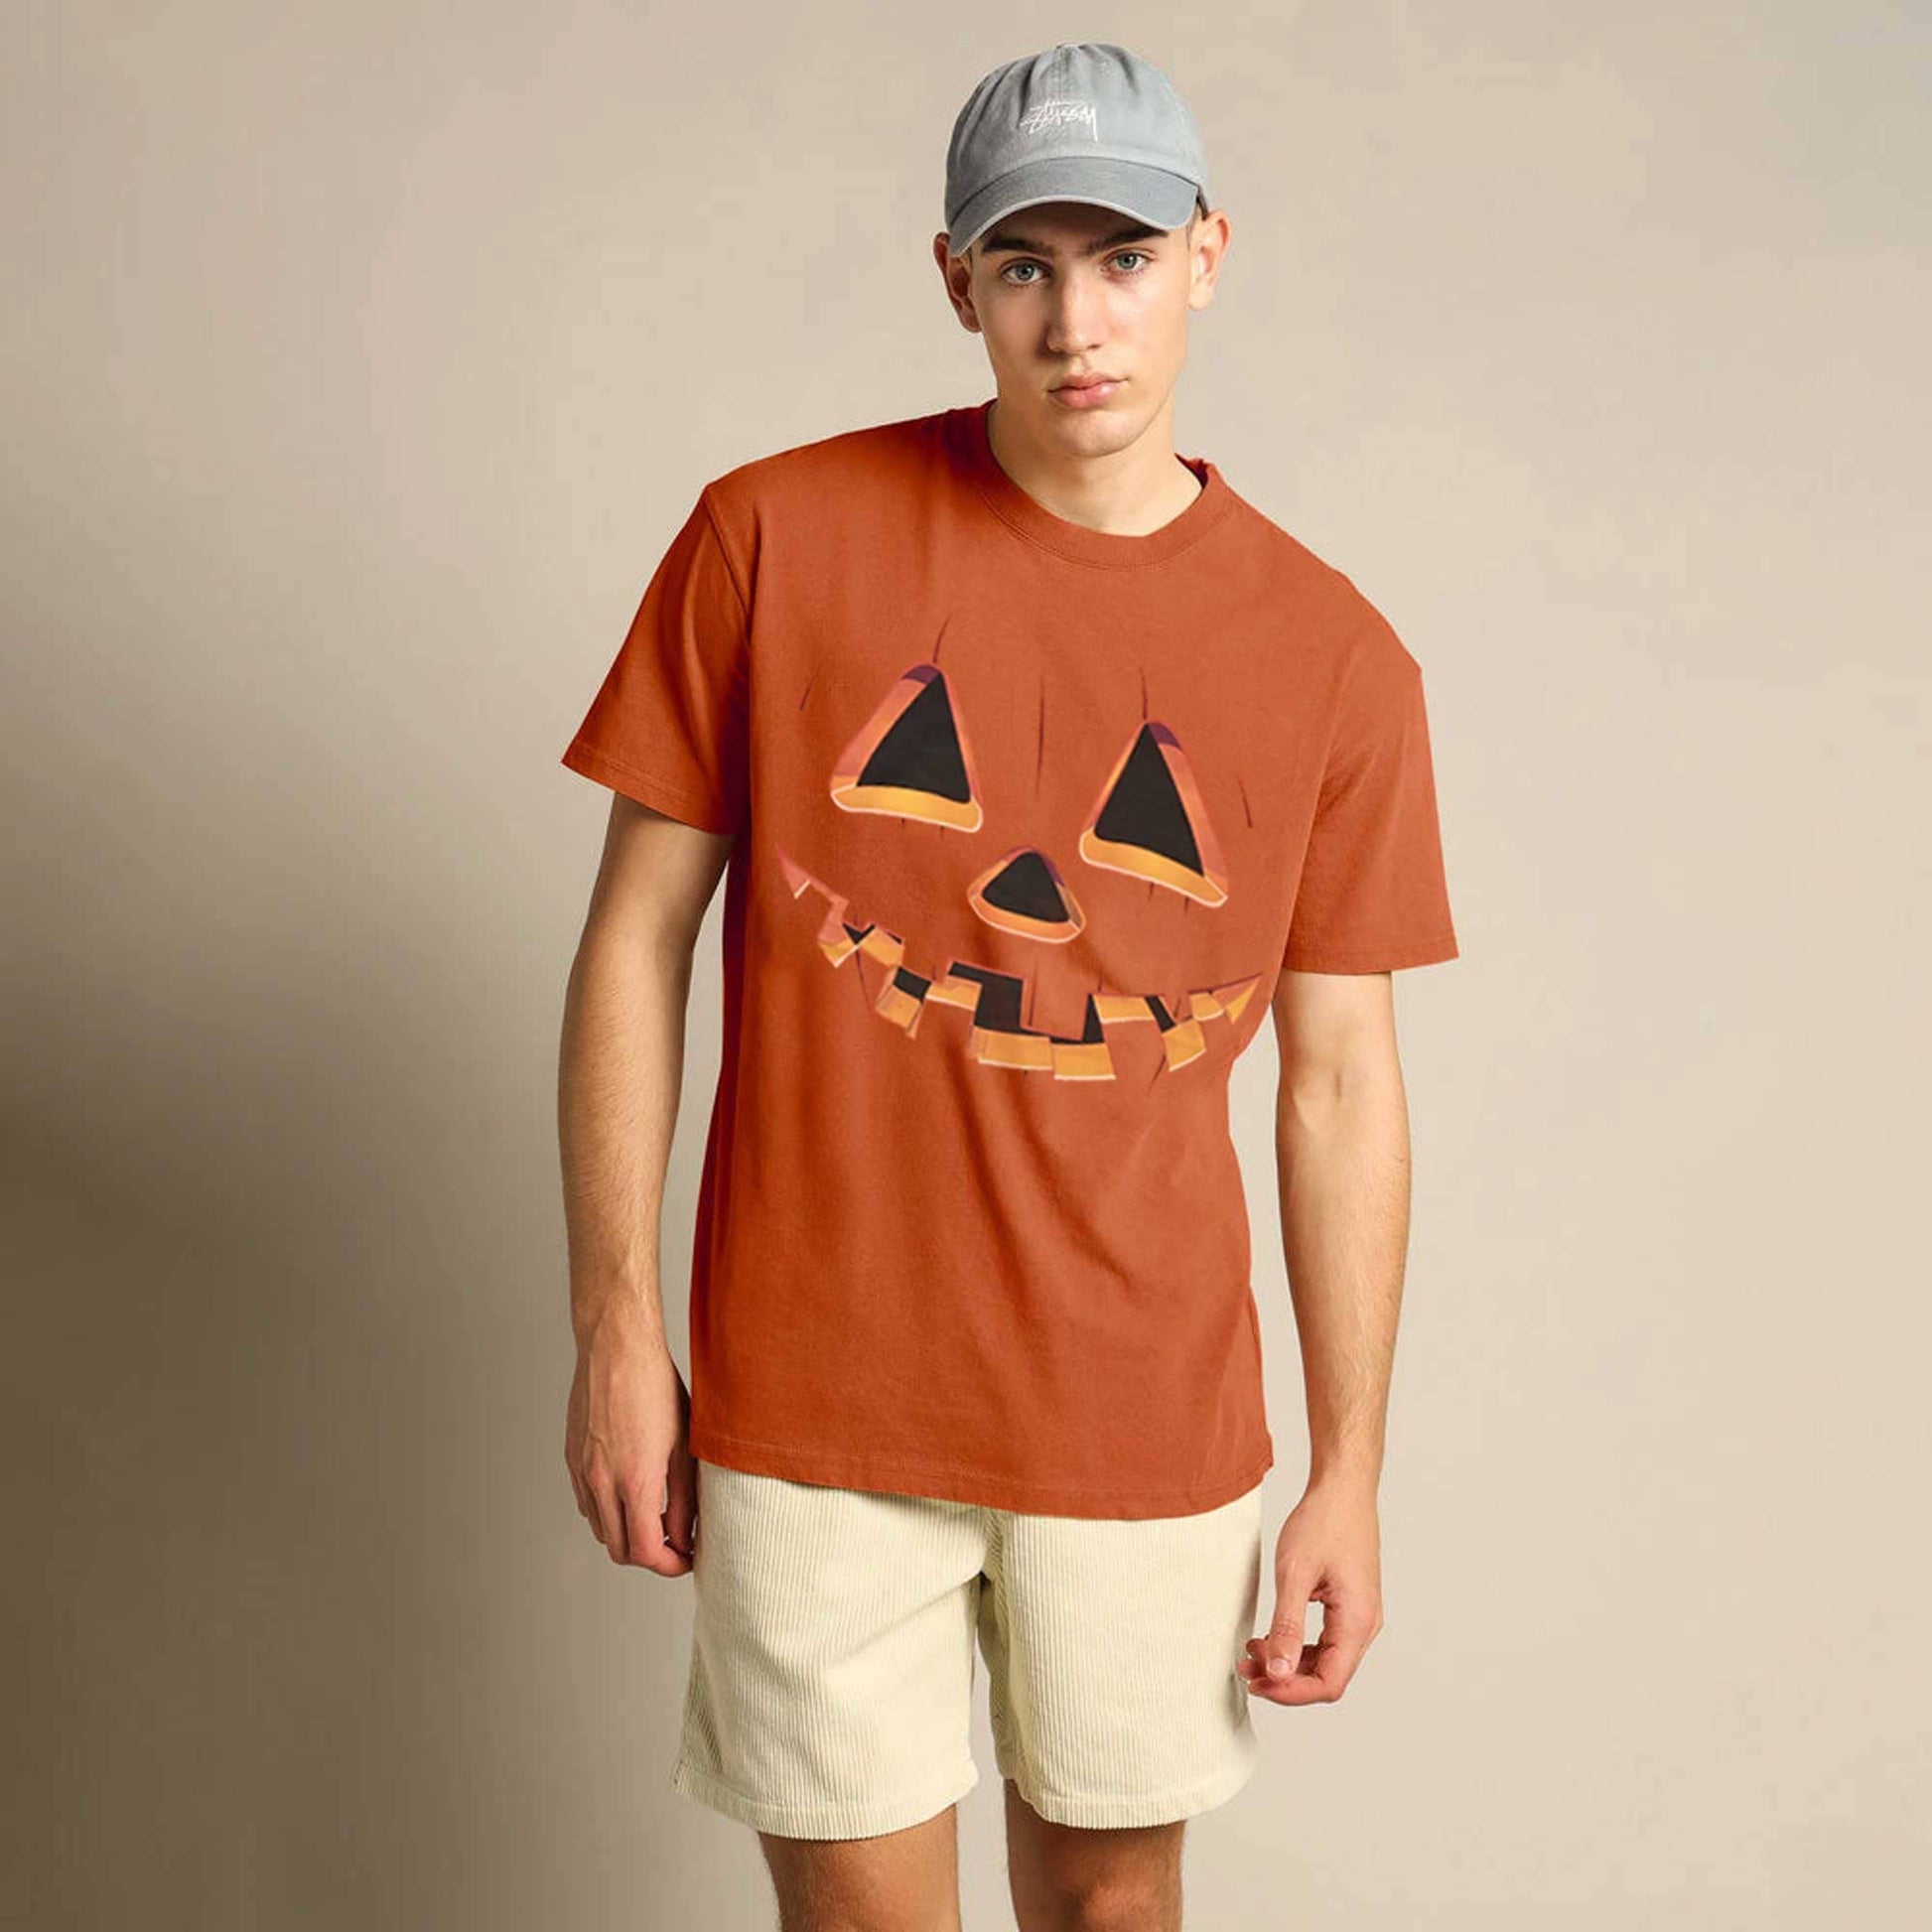 Celebrate Men's Halloween Printed Style Tee Shirt Men's Tee Shirt HAS Apparel Orange S 